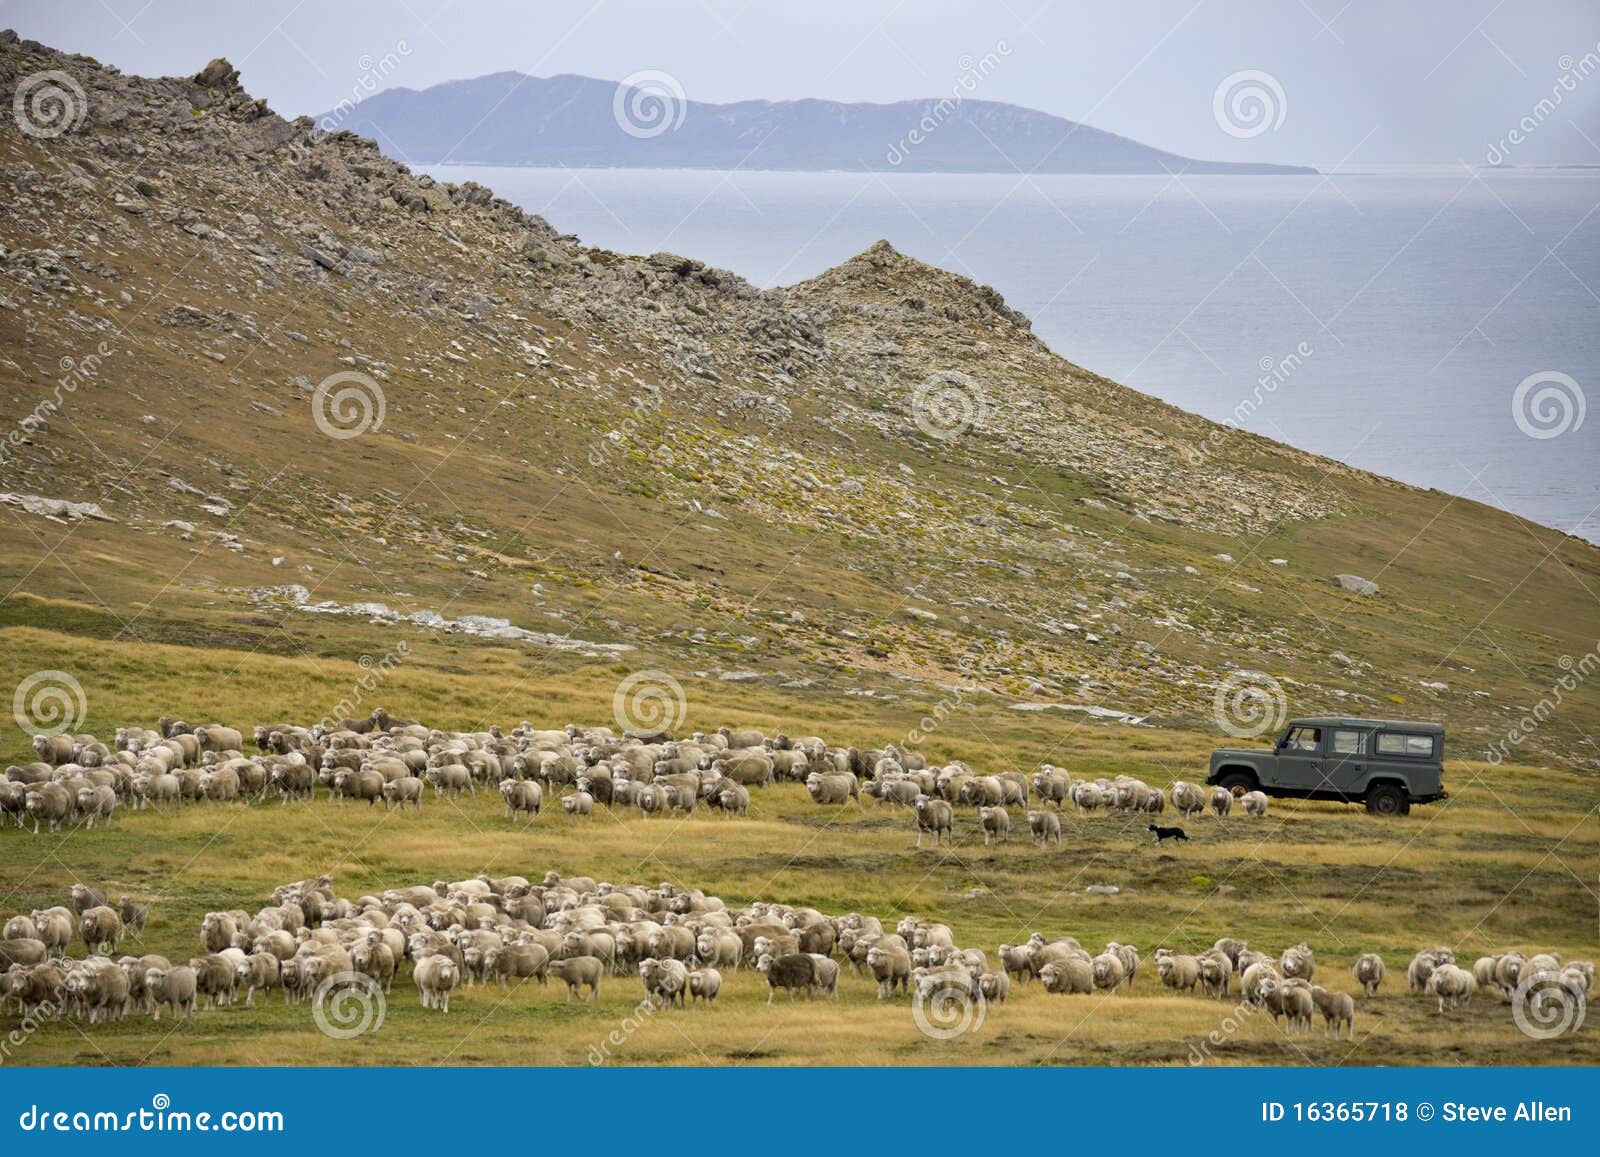 sheep herding - falkland islands